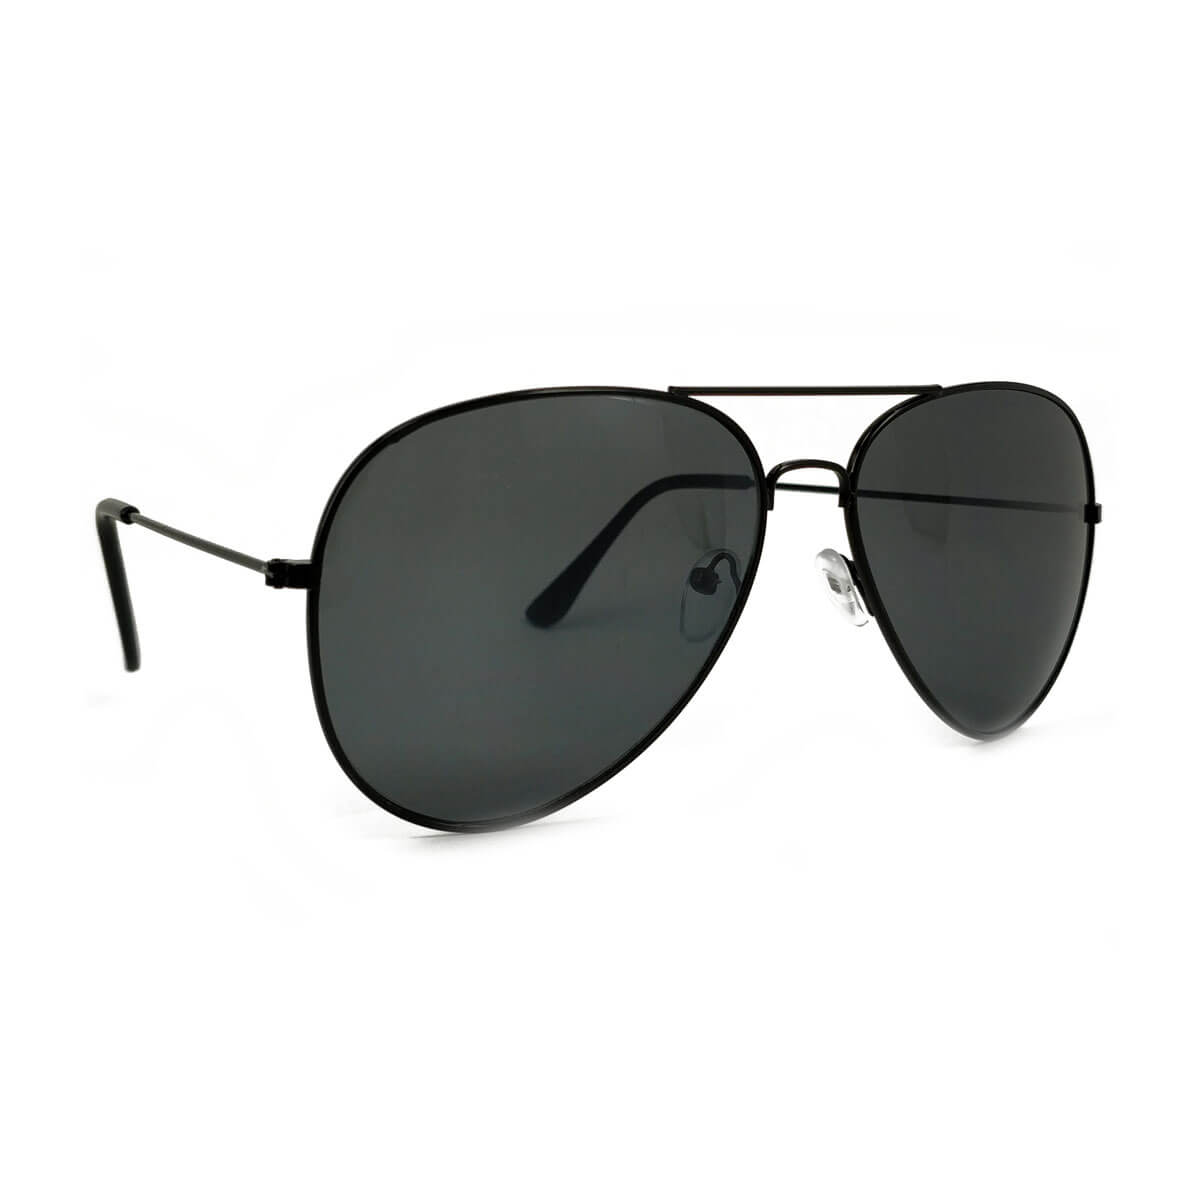 Black big pilot glasses sunglasses